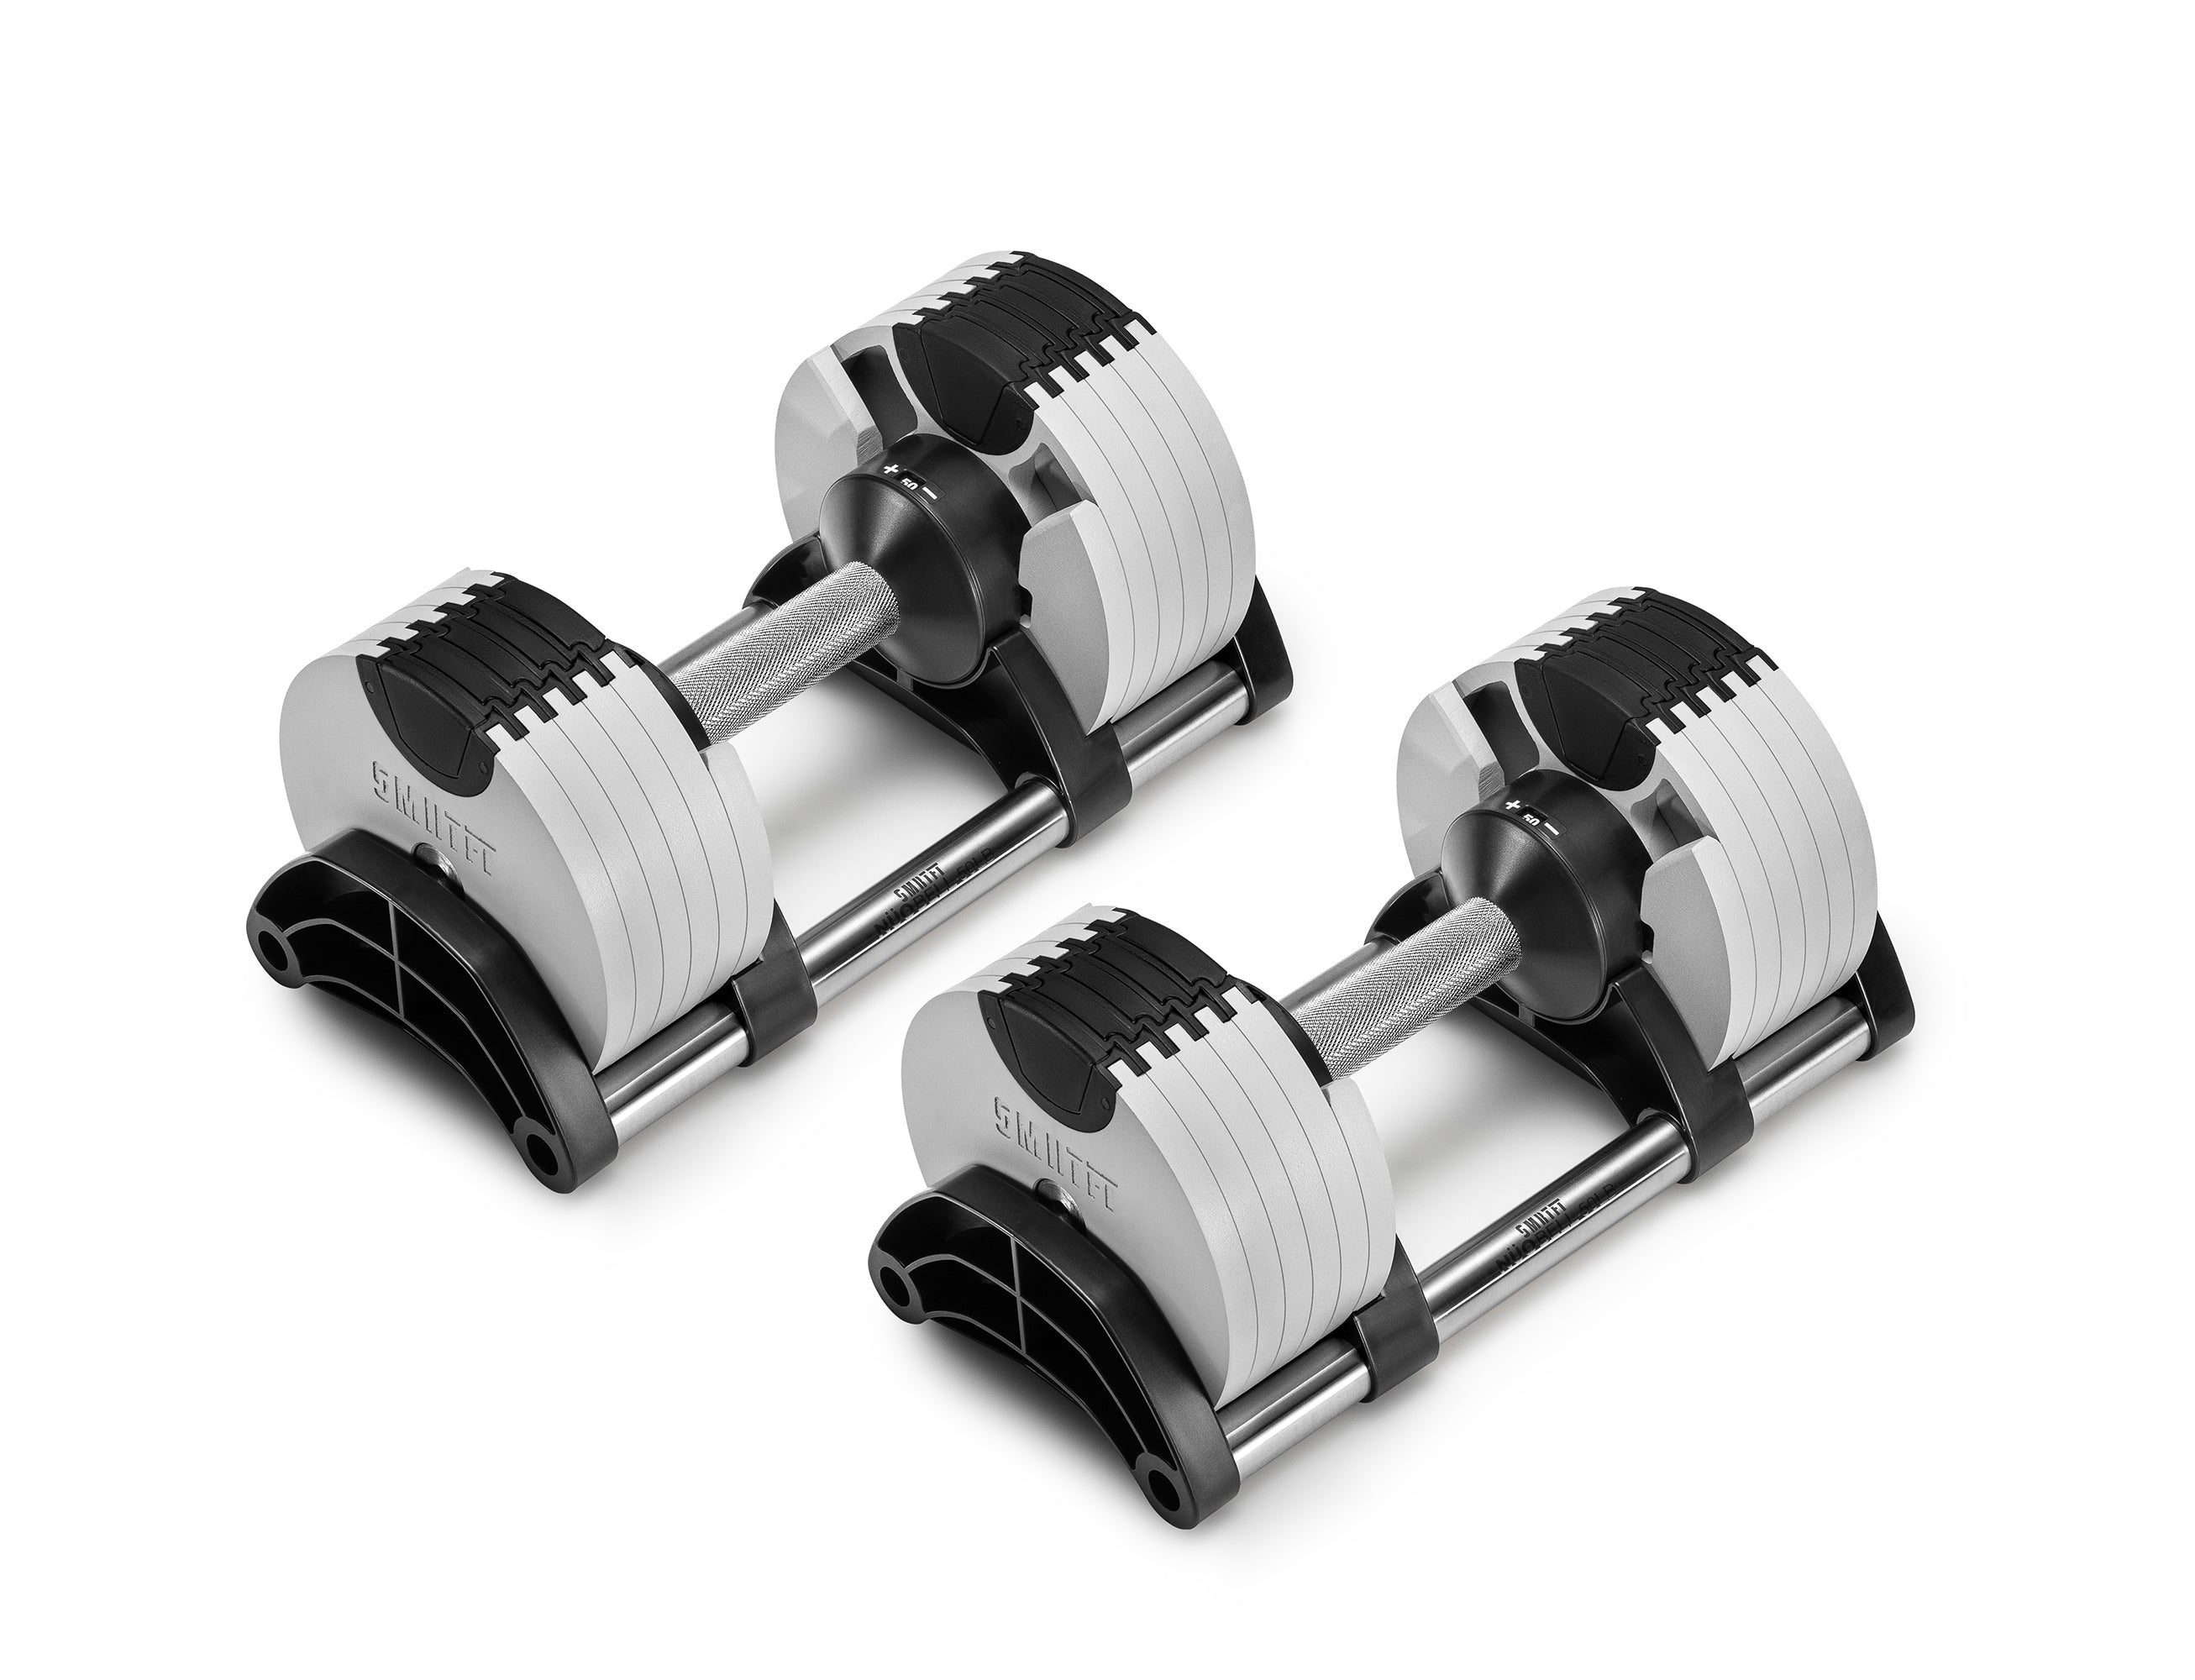 Discover Nüobell 50LB The Best Adjustable Dumbbells To Workout